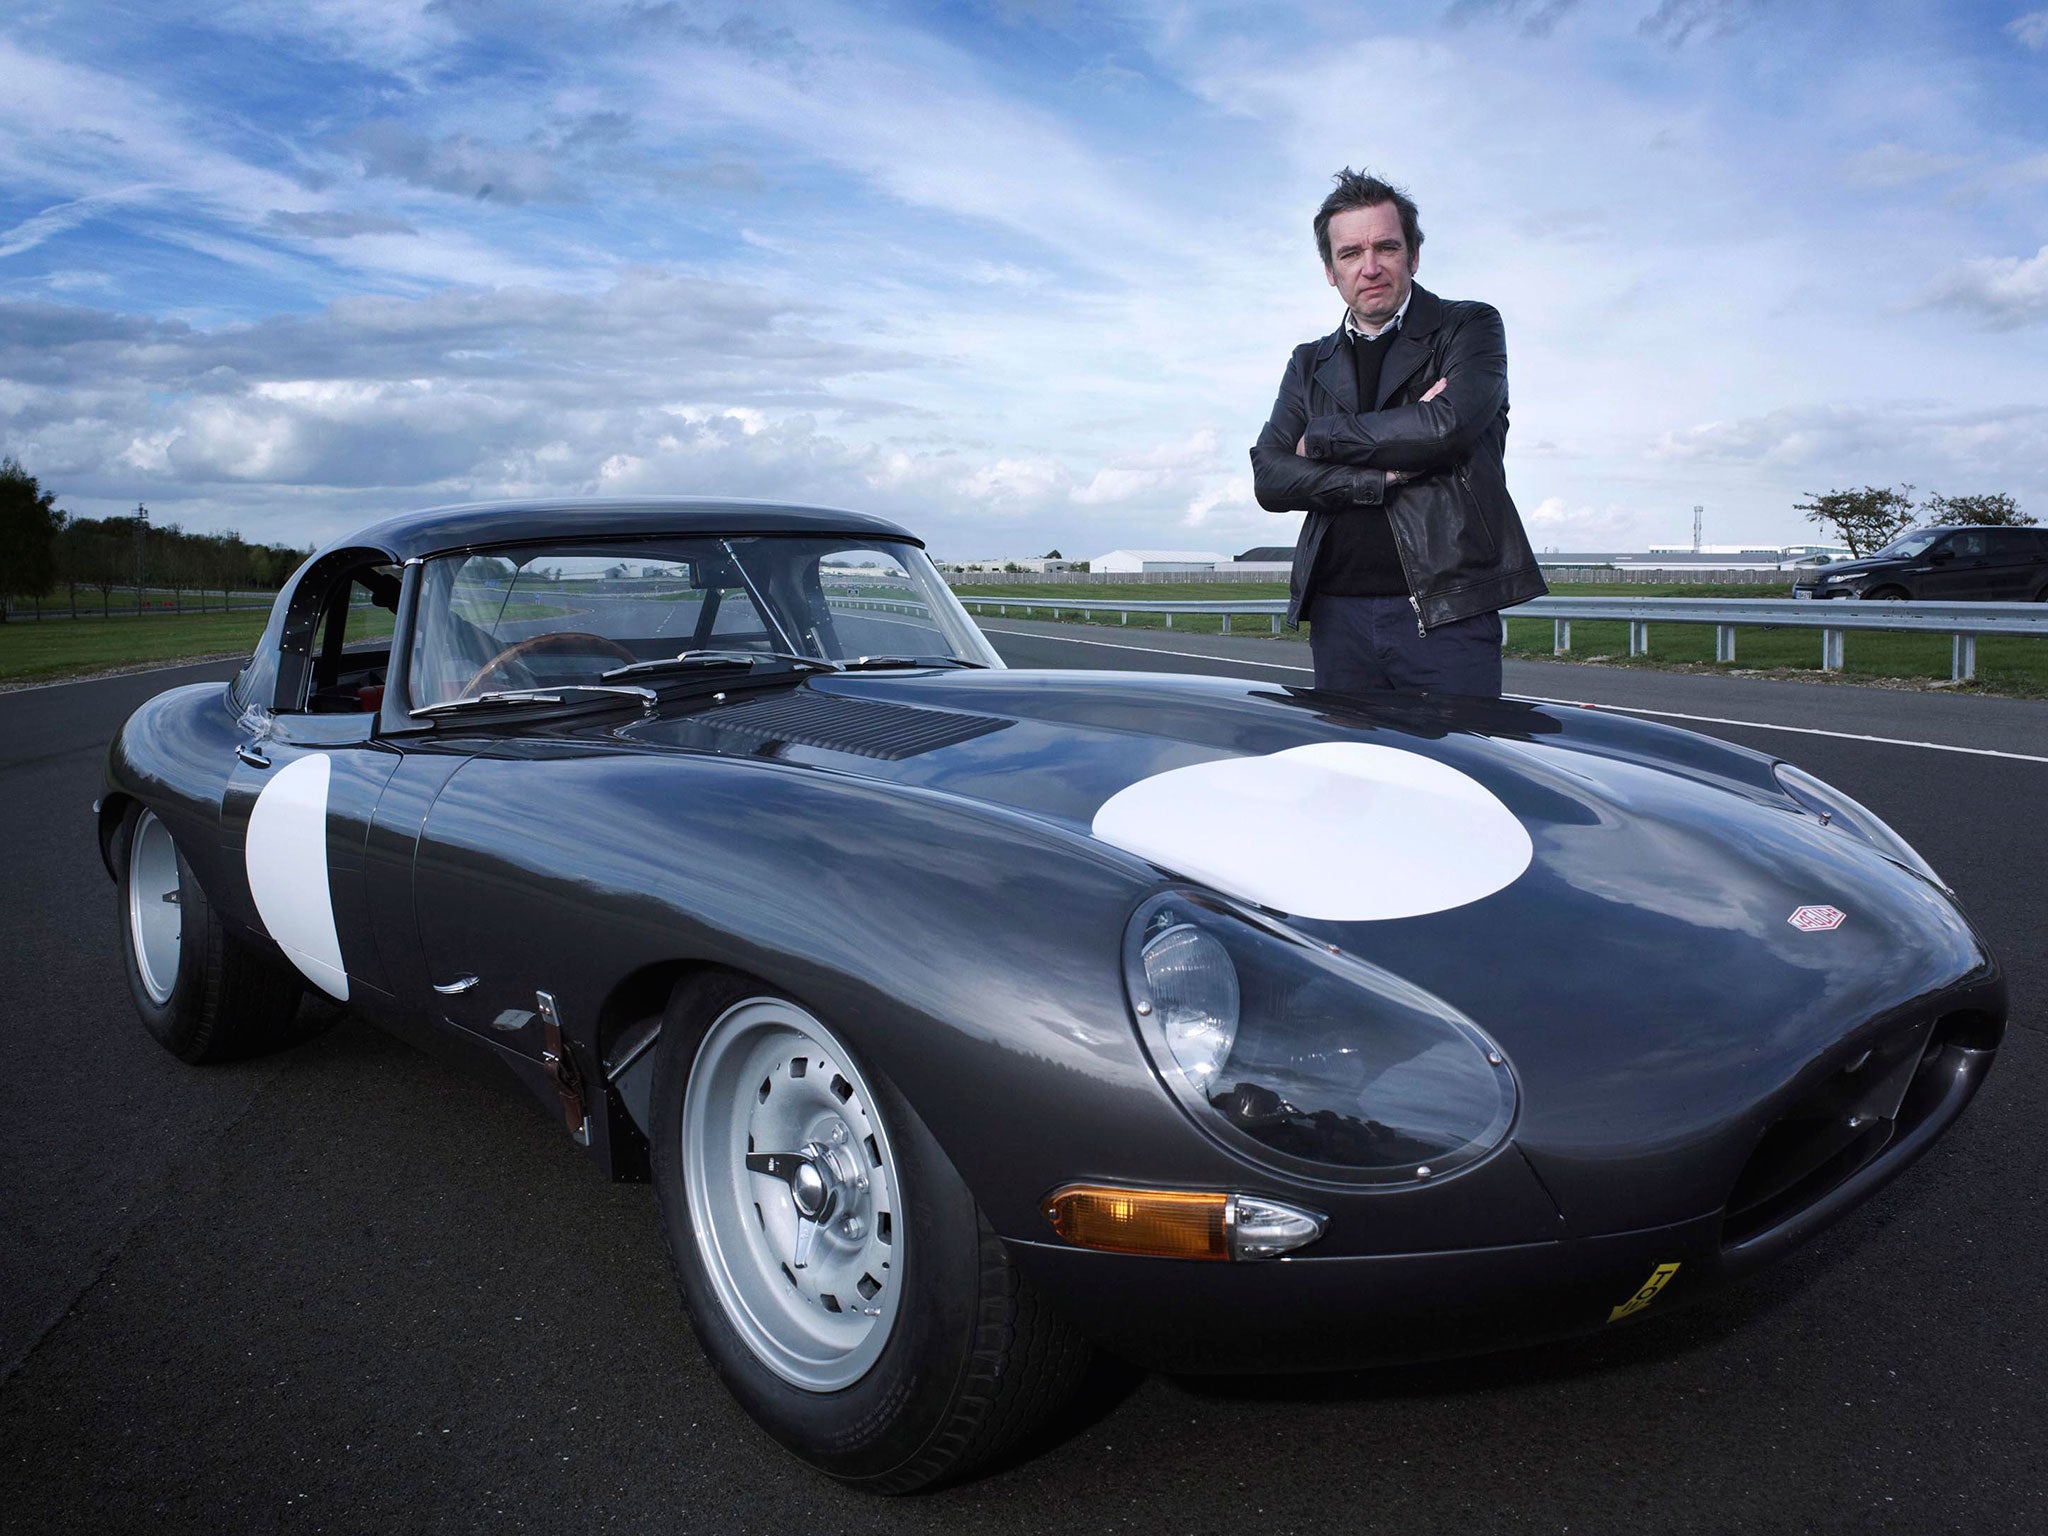 Life in the fast lane: Mark Evans presented 'Inside Jaguar: Making a Million Pound Car'